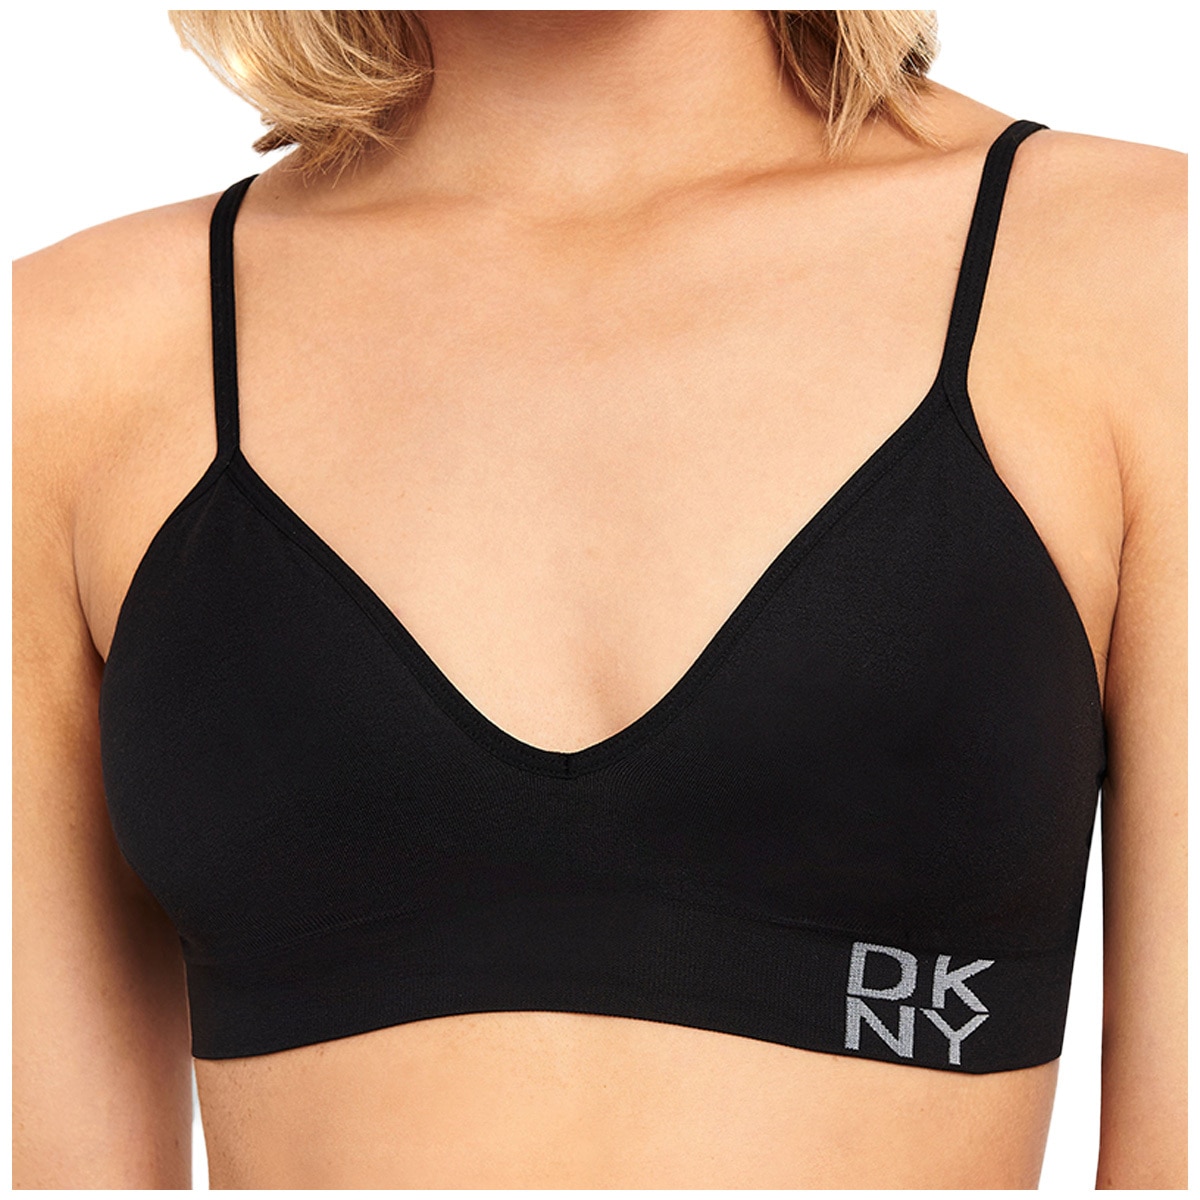 415721 DKNY SPORT sports bra in black/white - - Depop